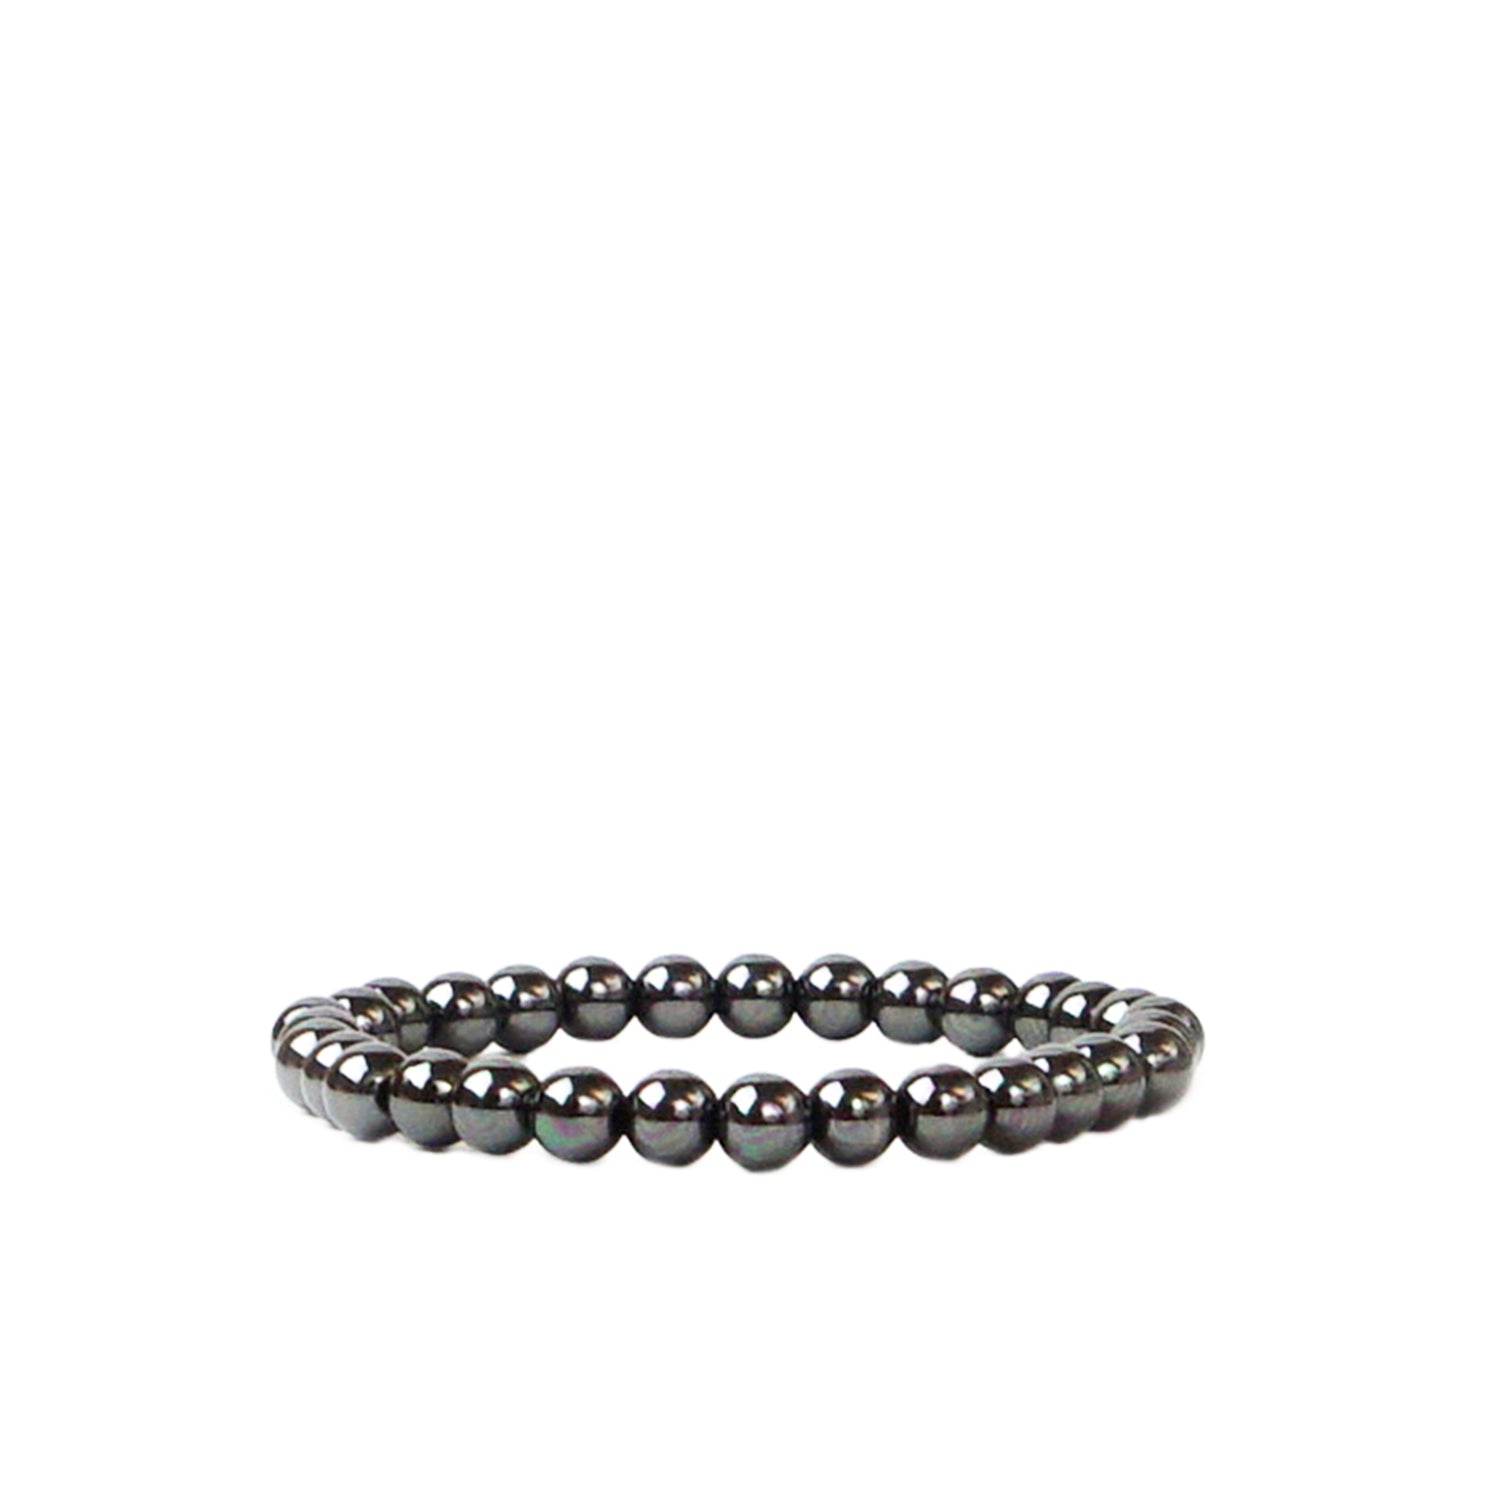 6 mm metal beaded stretch bracelet